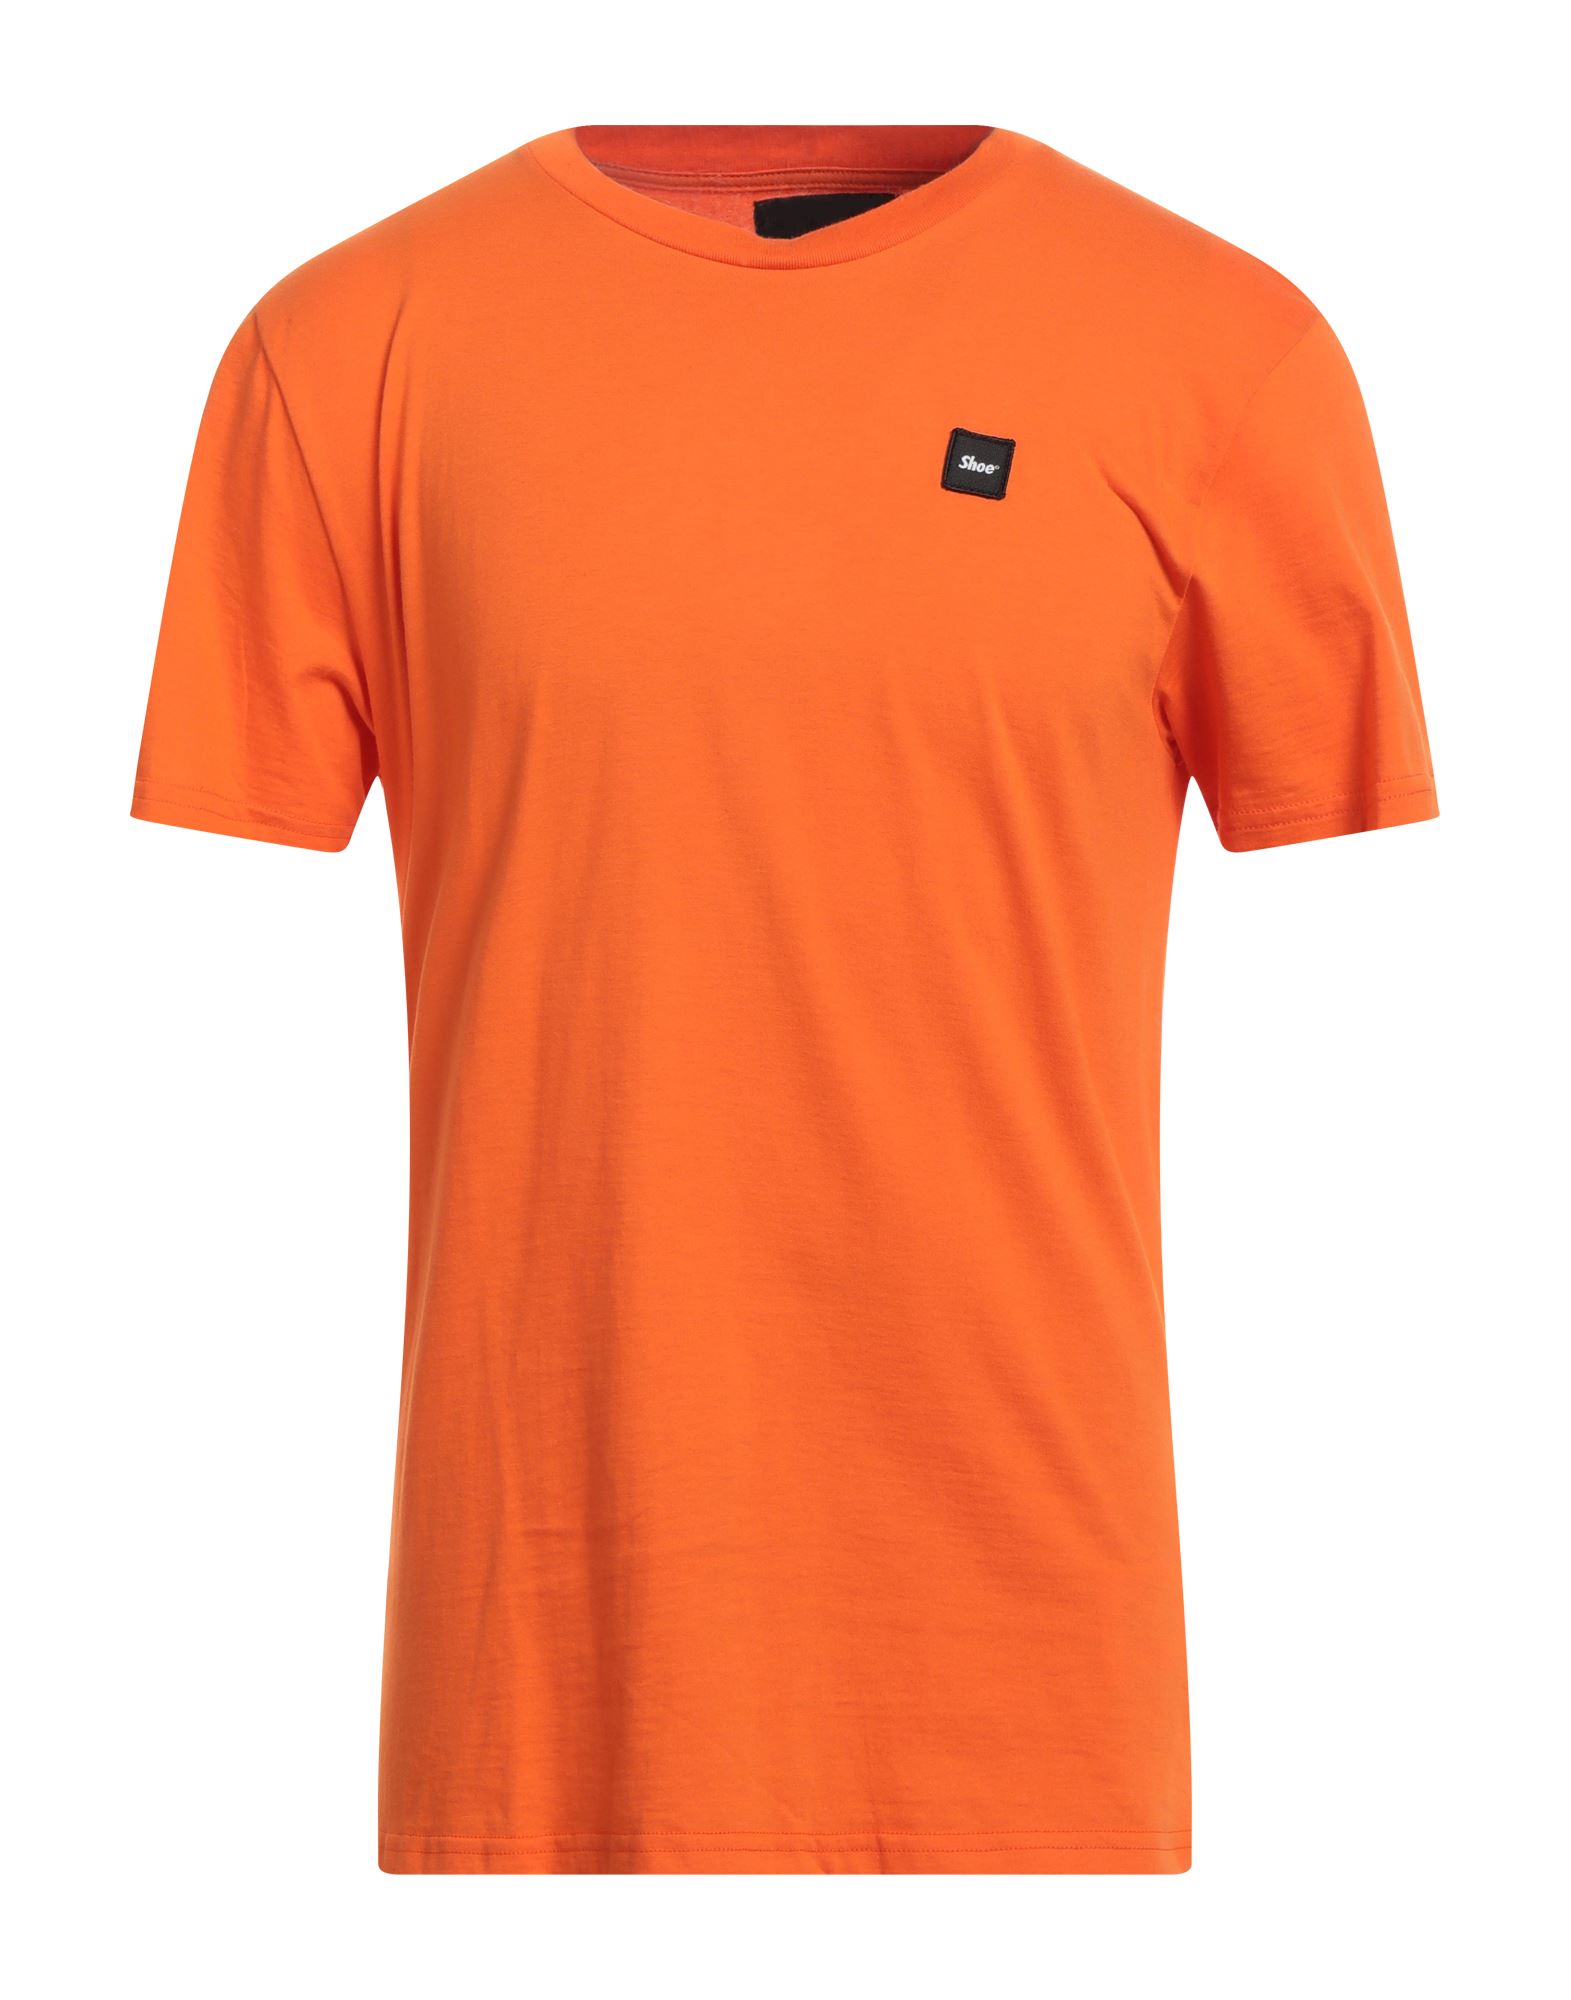 Shoe® Shoe Man T-shirt Orange Size S Cotton